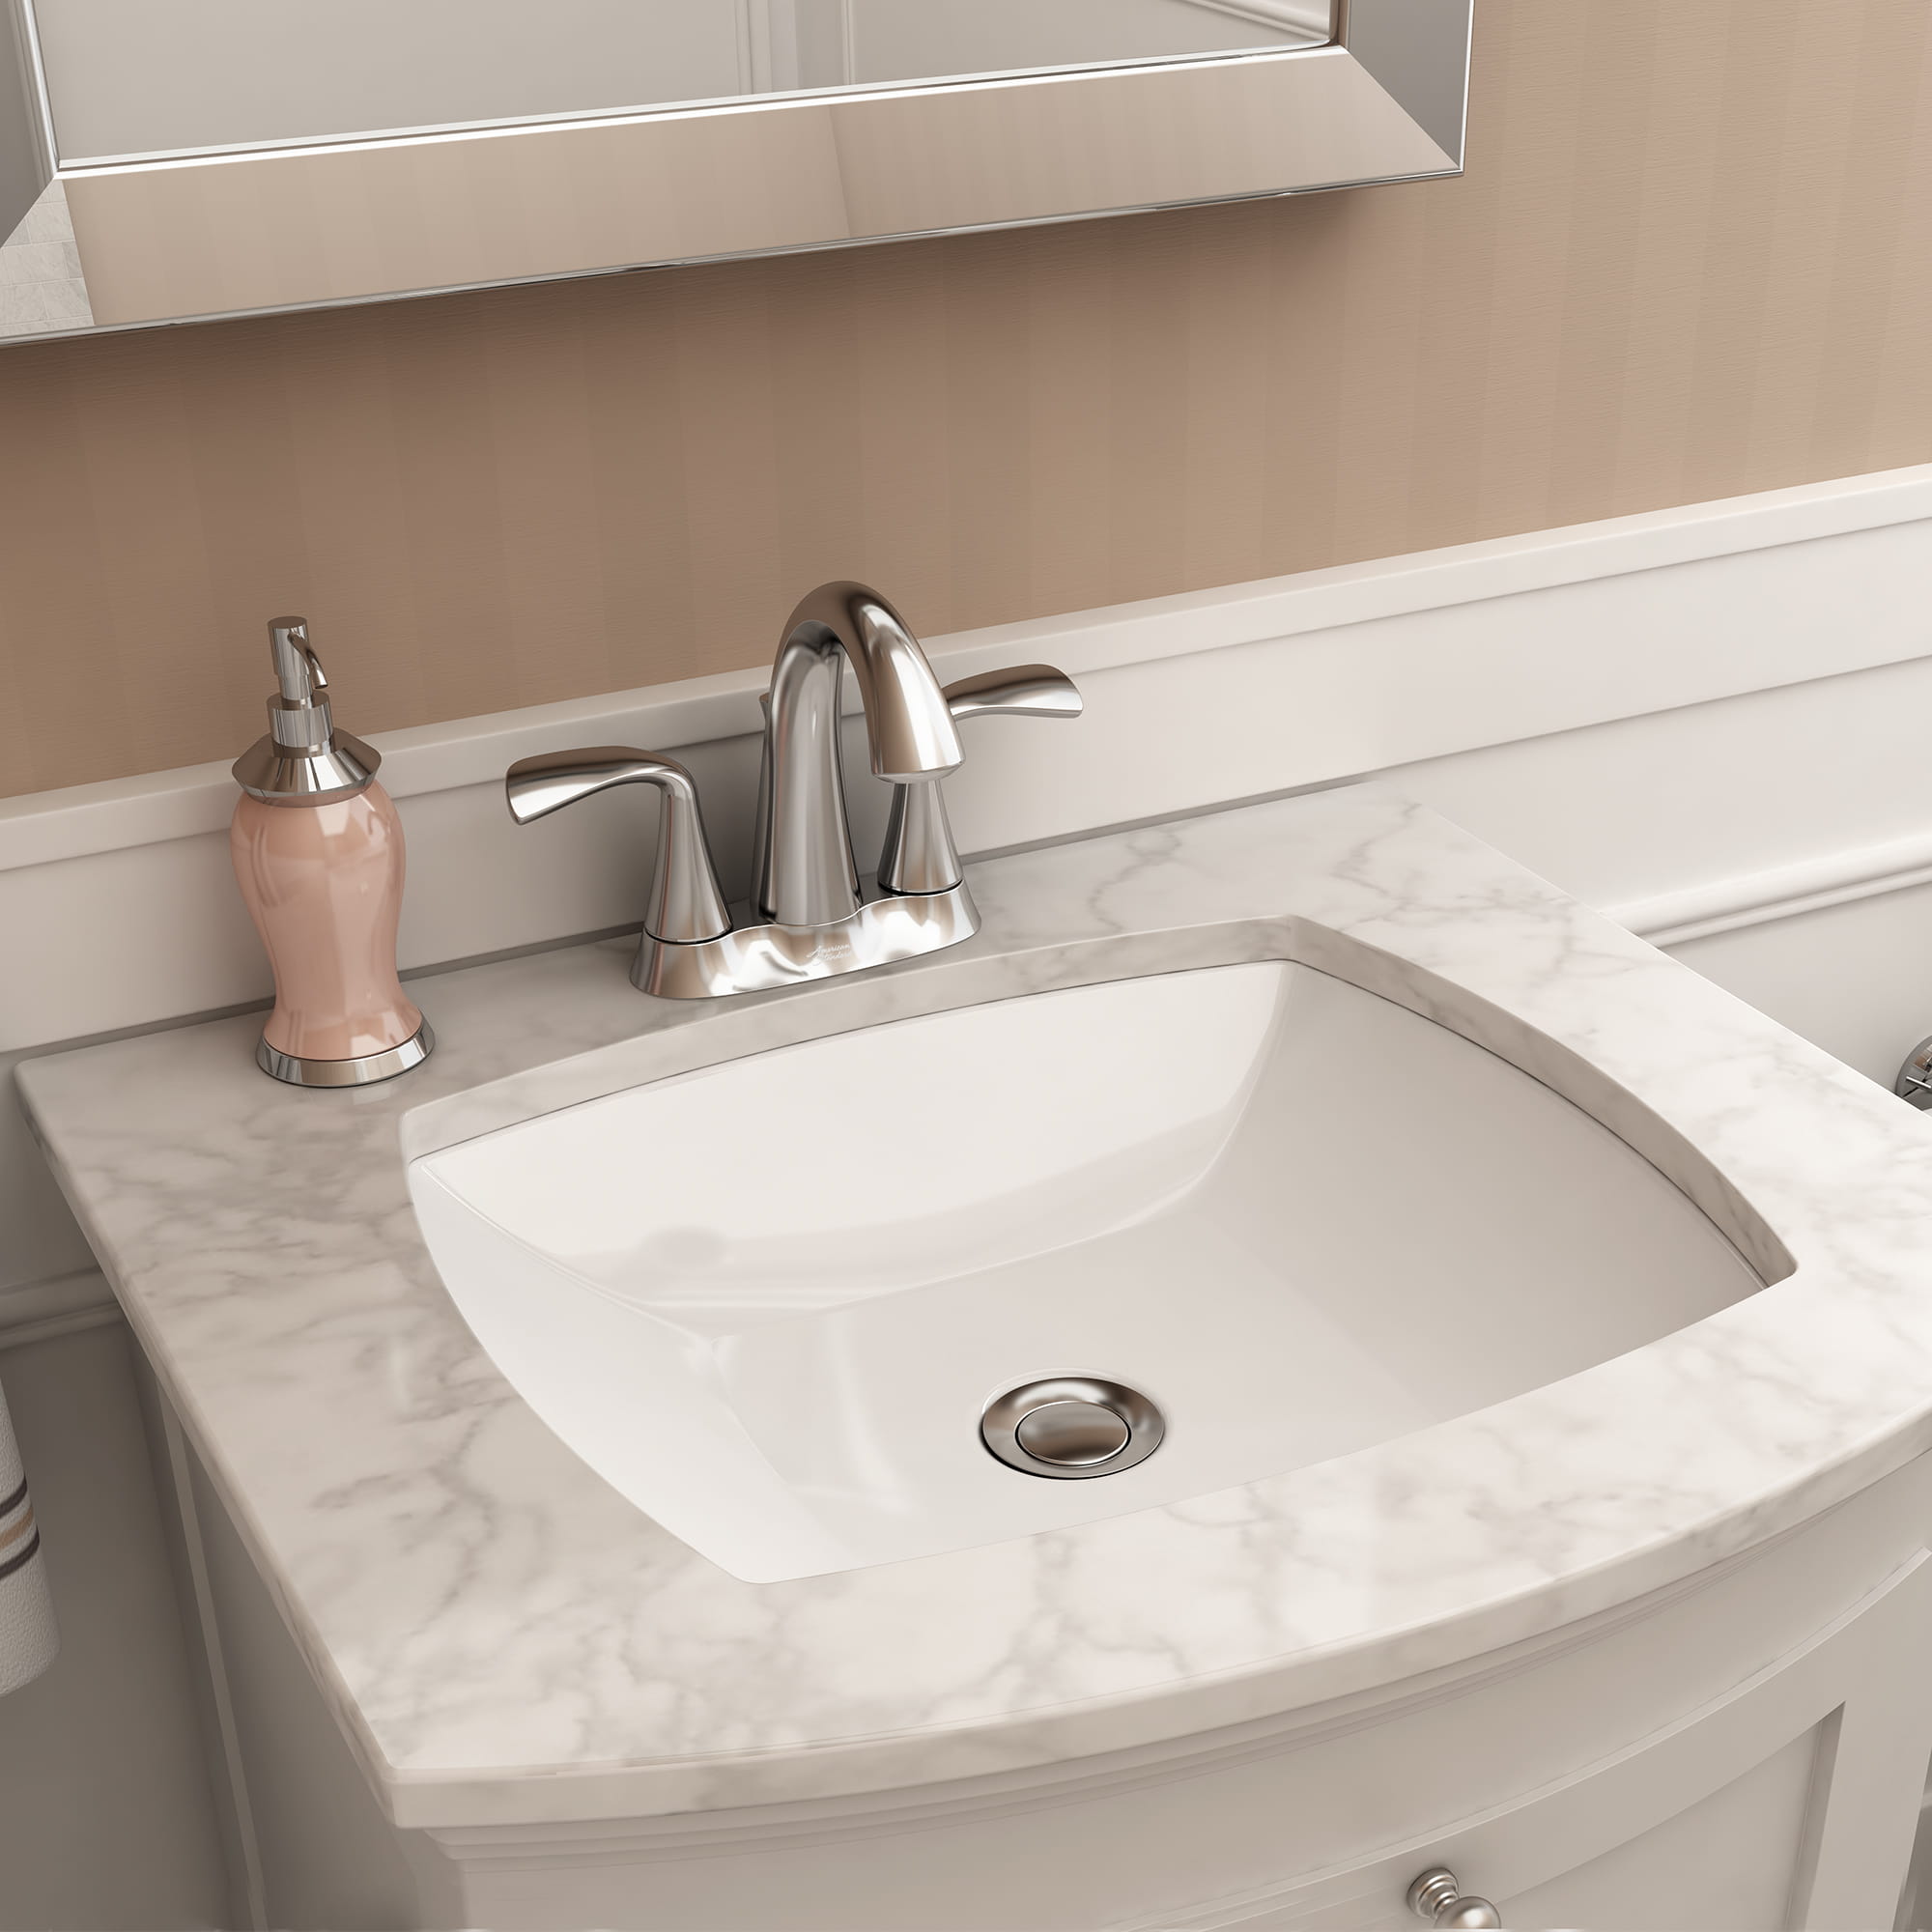 Fluent® 4-Inch Centerset 2-Handle Bathroom Faucet 1.2 gpm/4.5 L/min With Lever Handles